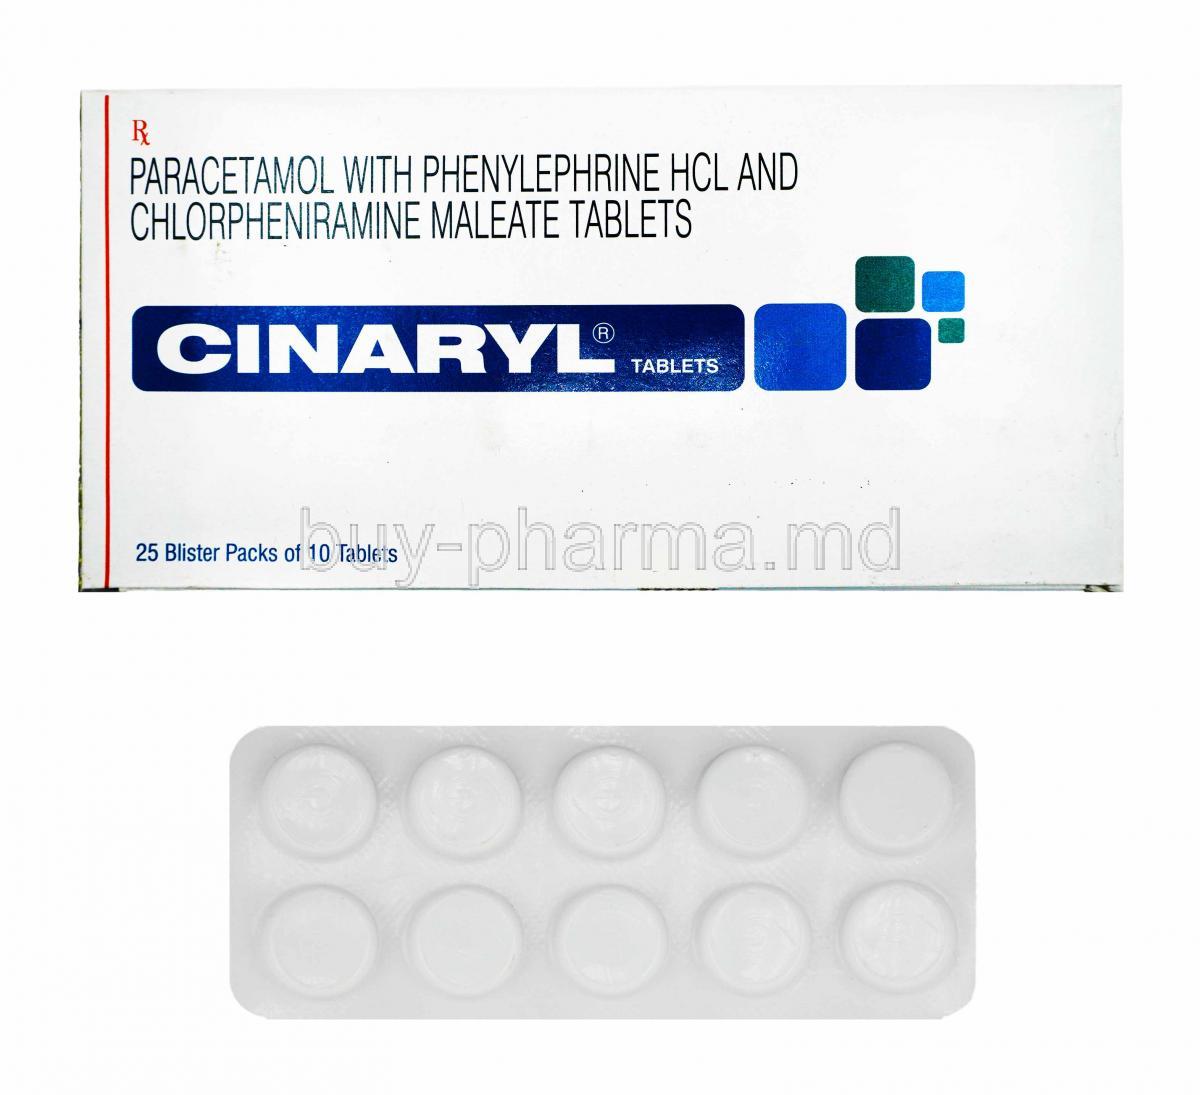 Cinaryl, Chlorpheniramine Maleate, Paracetamol and Phenylephrine box and tablets